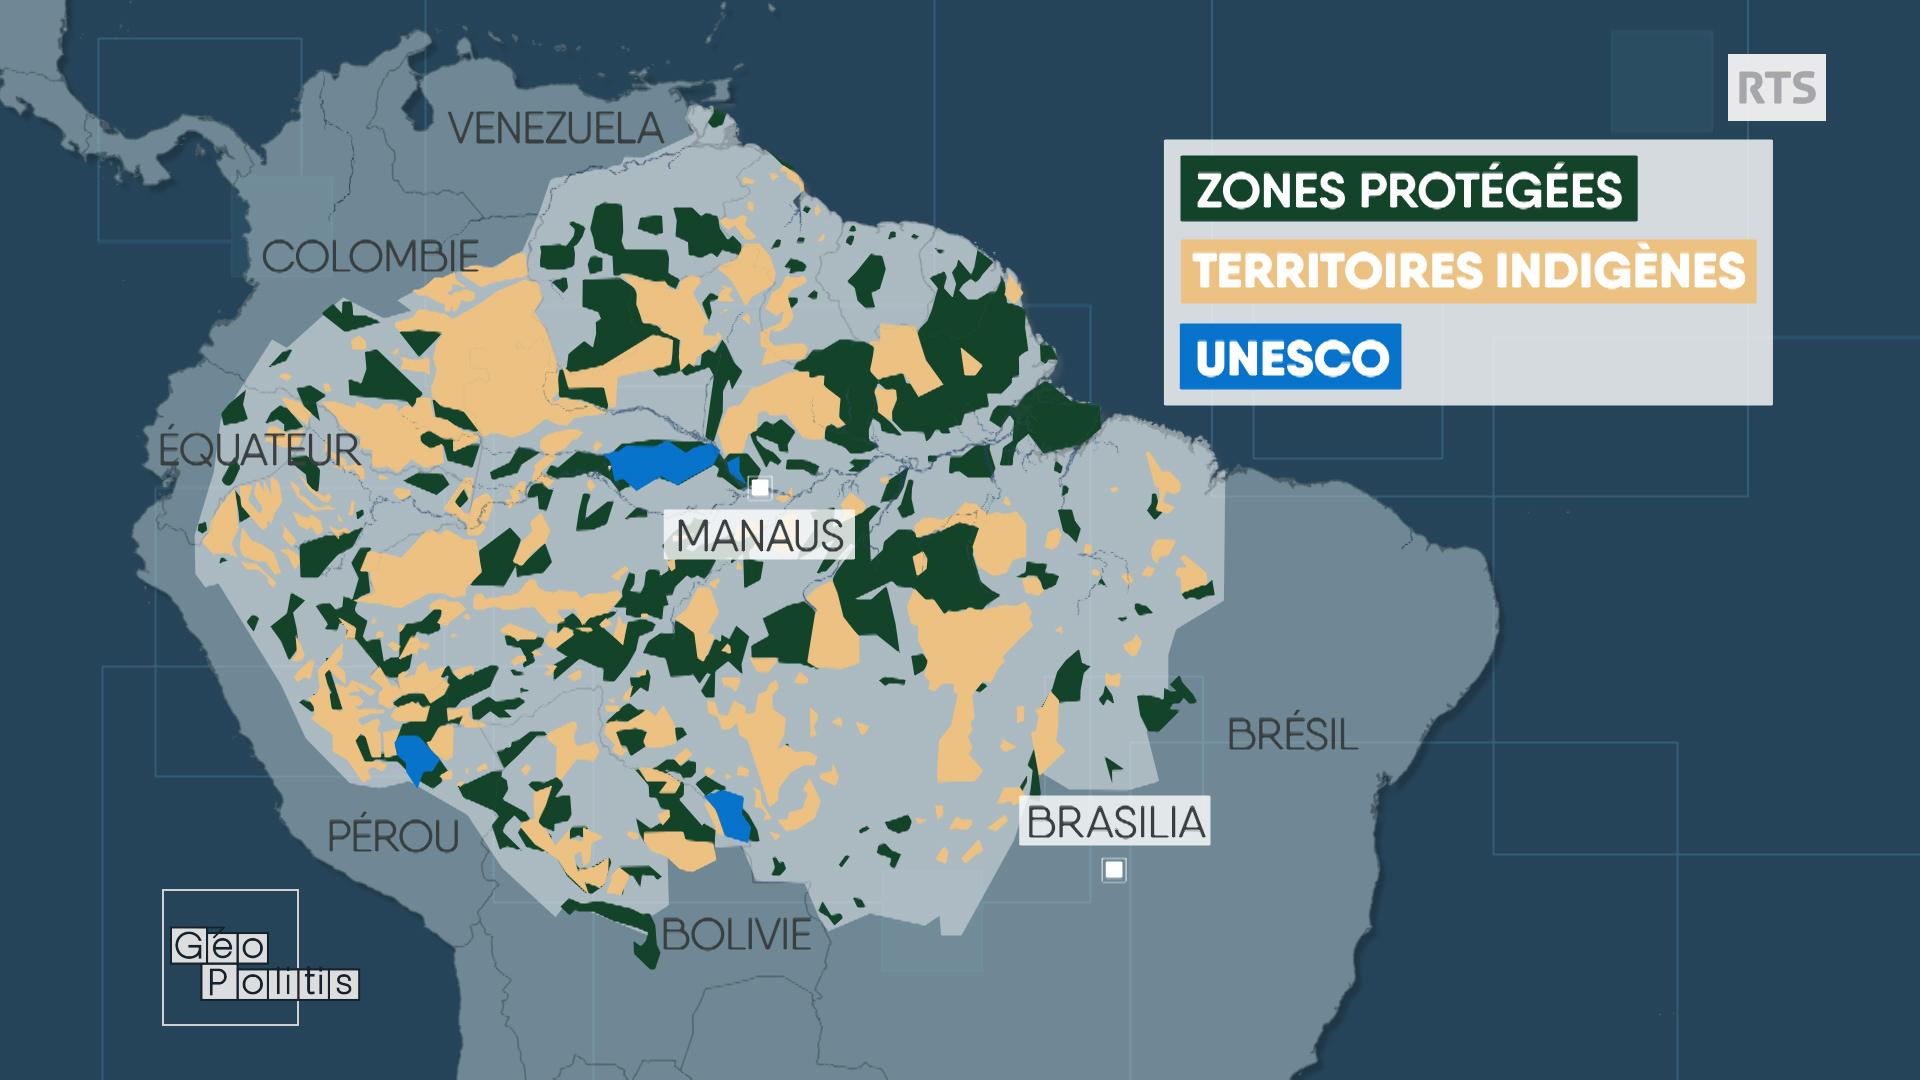 Territoires sous protection en Amazonie [RTS - Géopolitis]